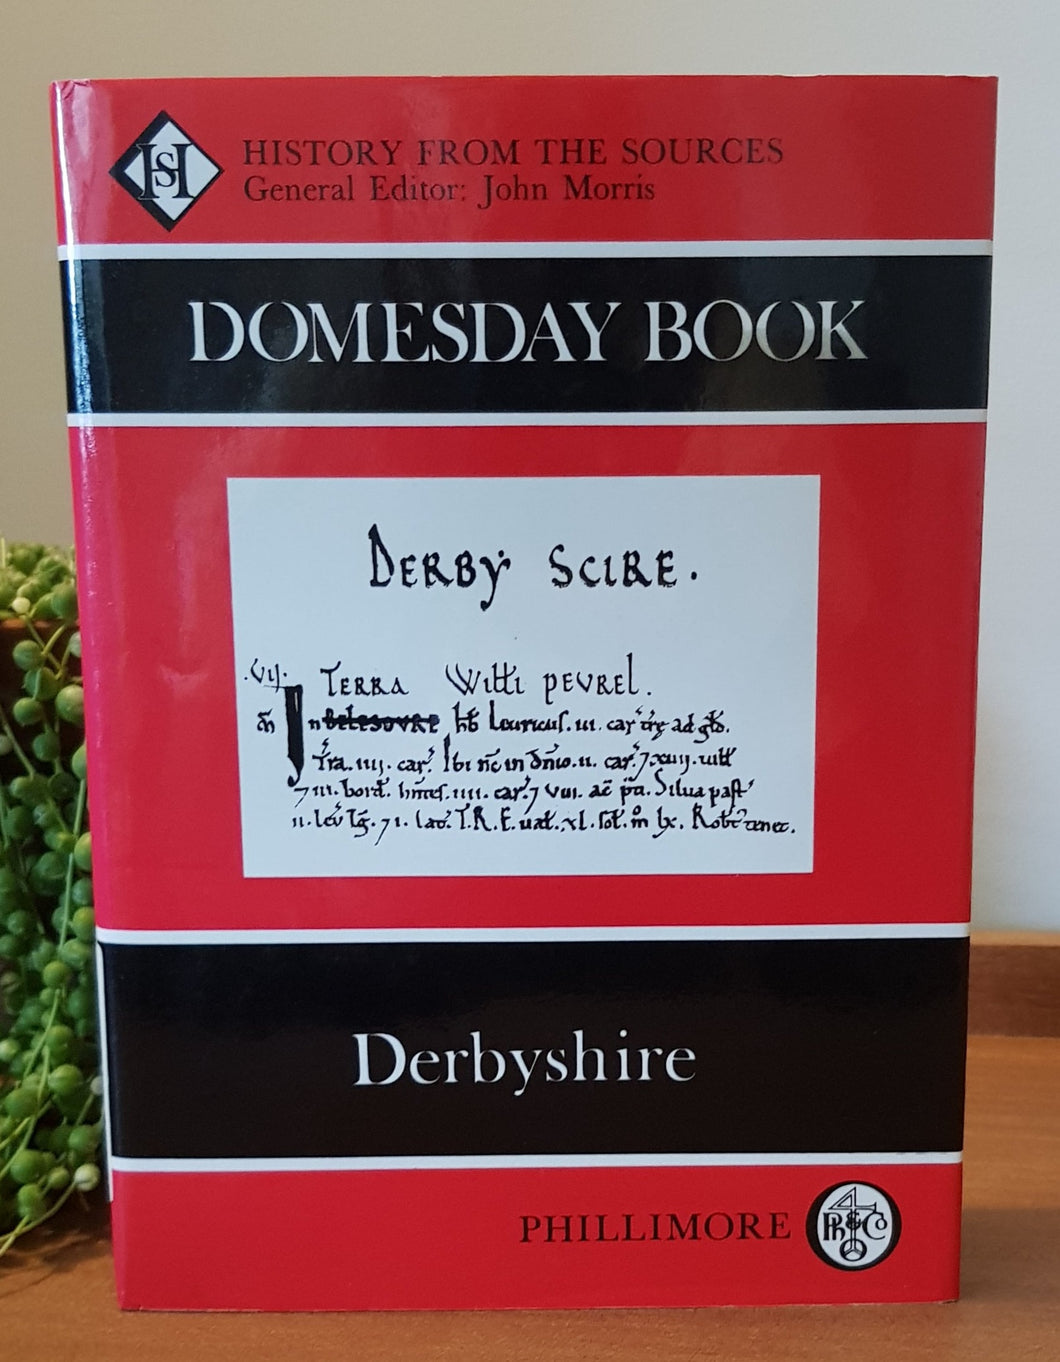 Domesday Book: Vol 27 Derbyshire by John Morris